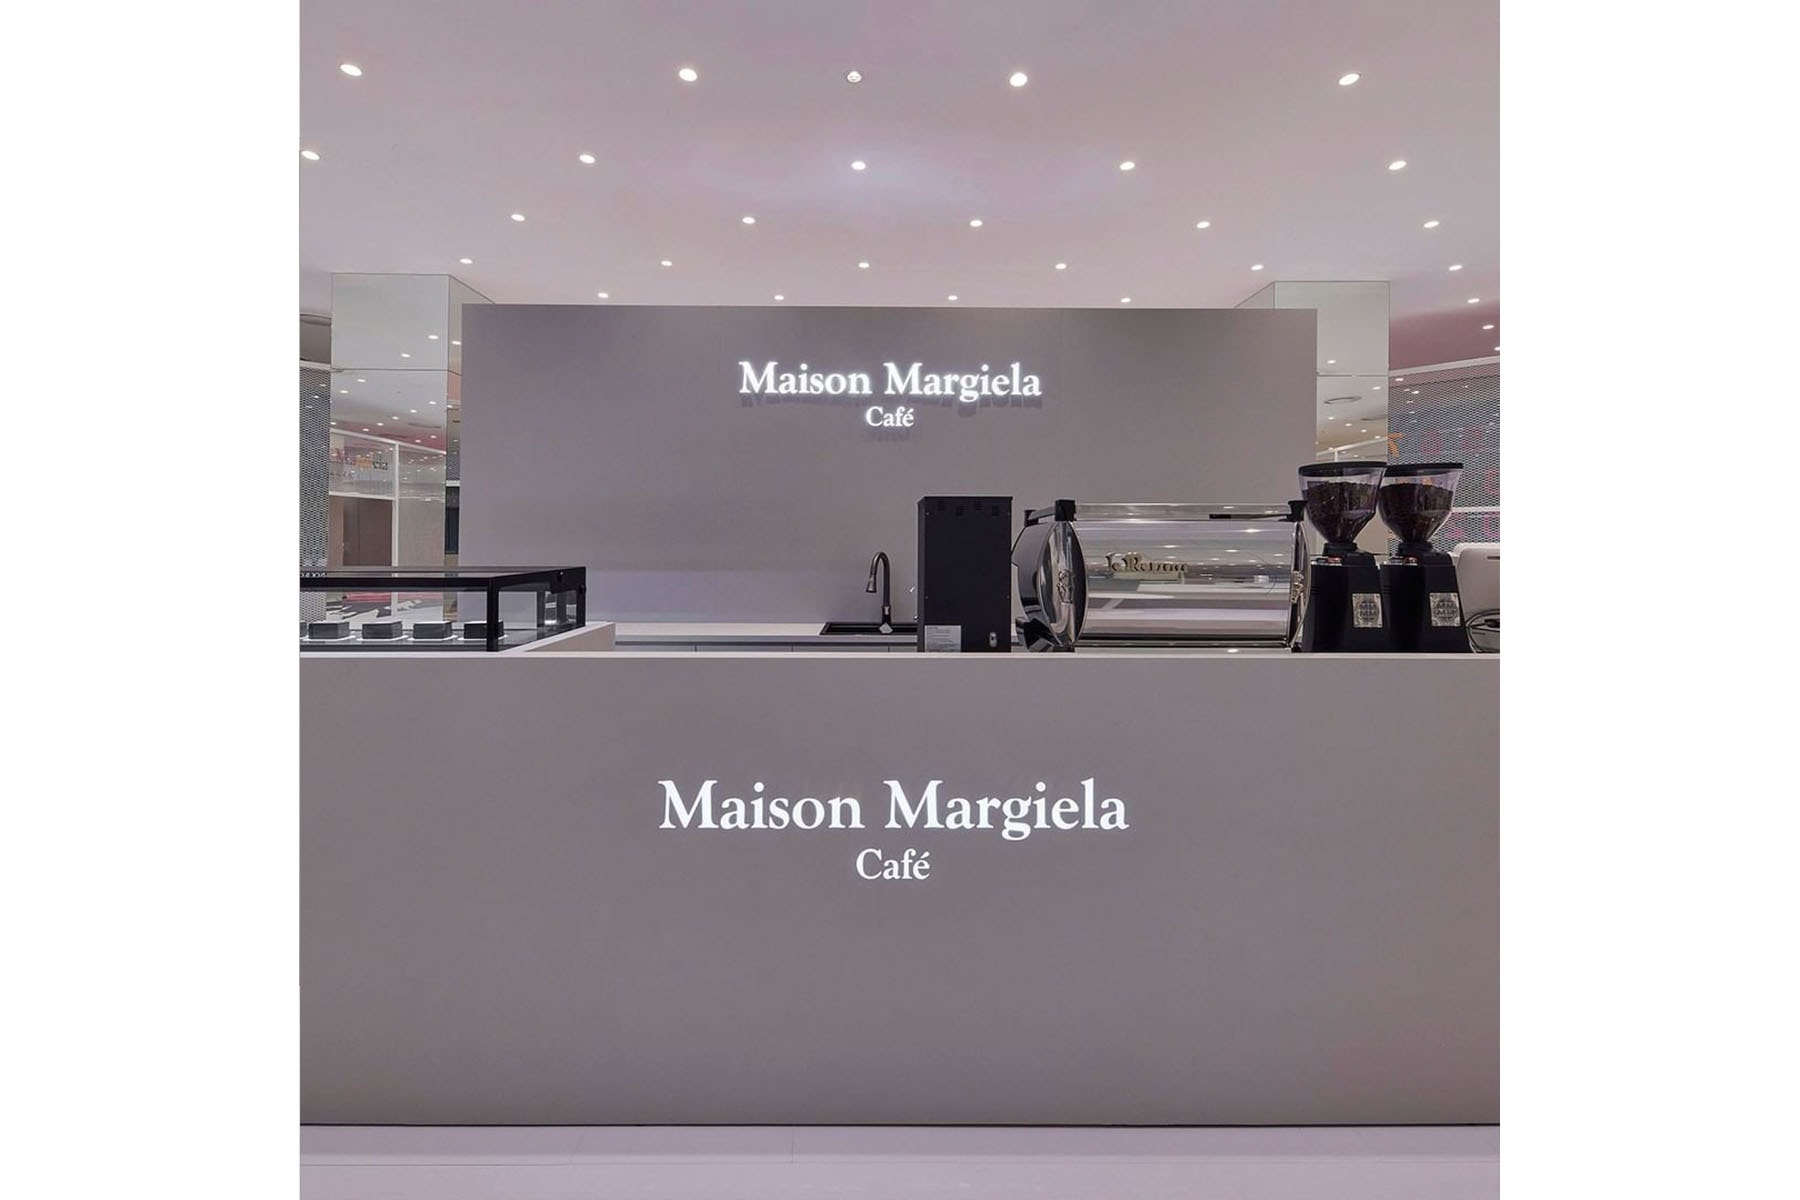 Maison Margiela 全新快閃店「5AC Bag & Cafe」正式登陸首爾現代百貨